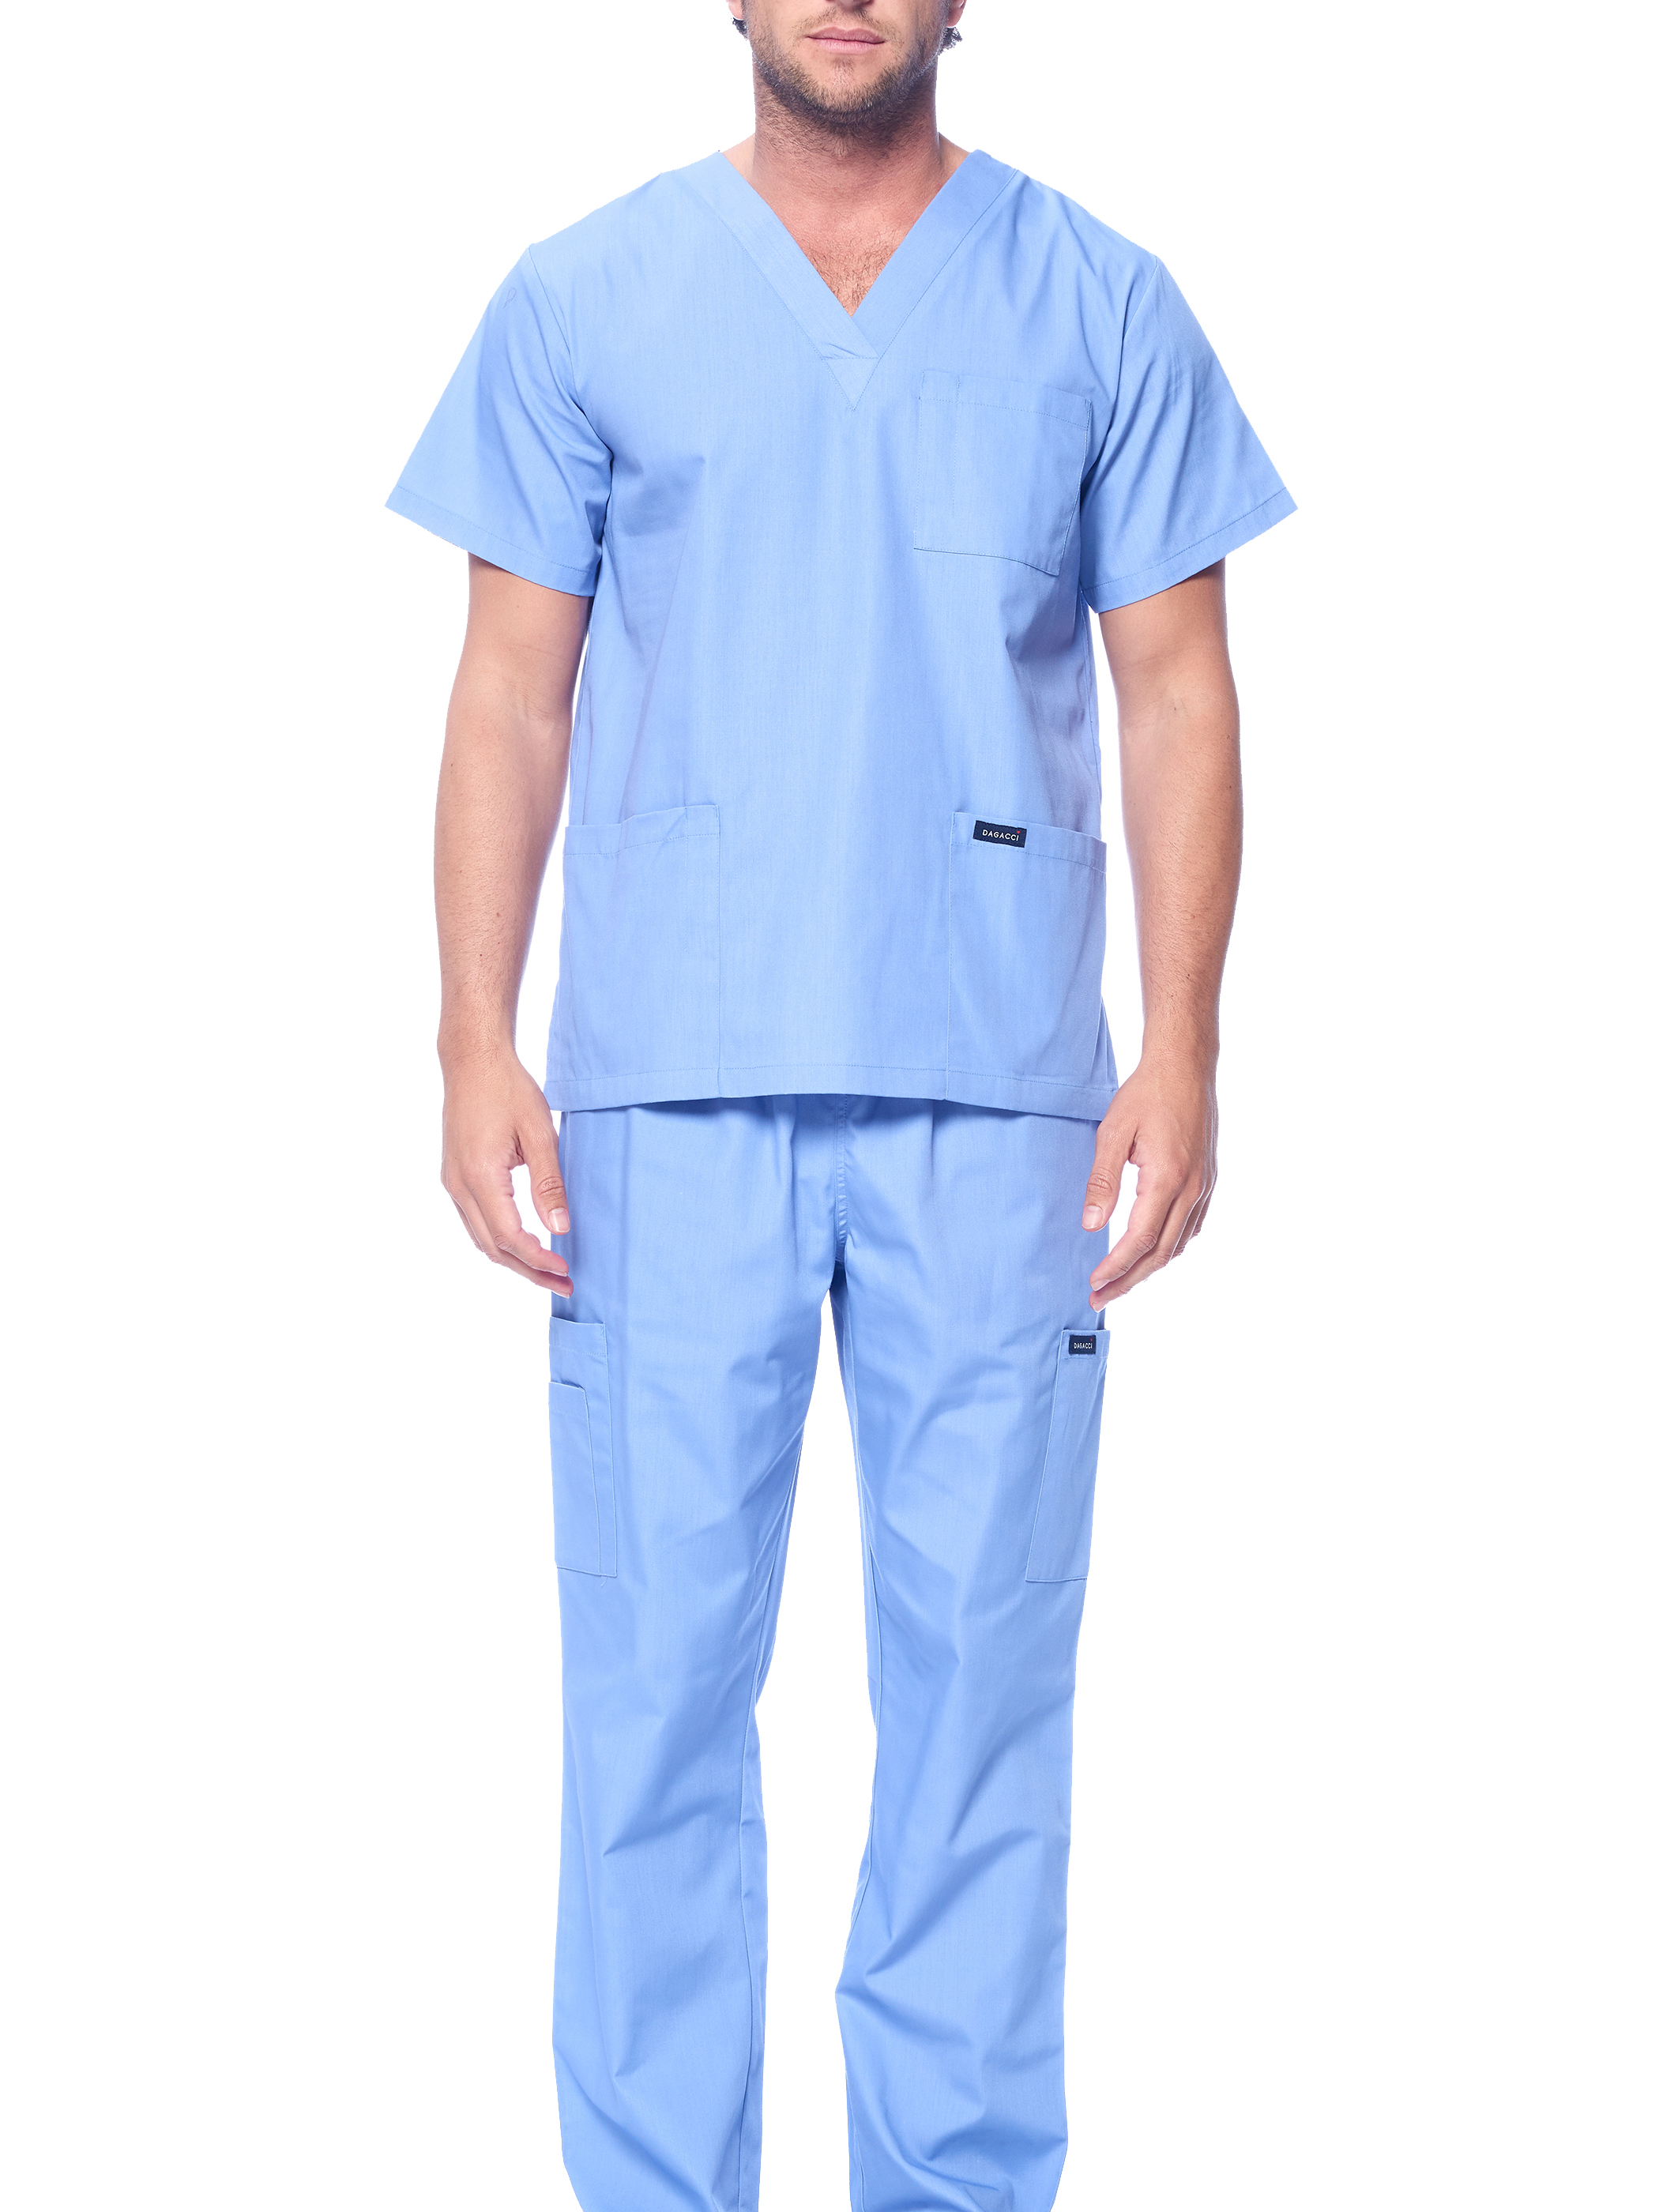 Dagacci Medical Uniform Unisex Scrubs Set Scrub Top and Pants - image 2 of 4